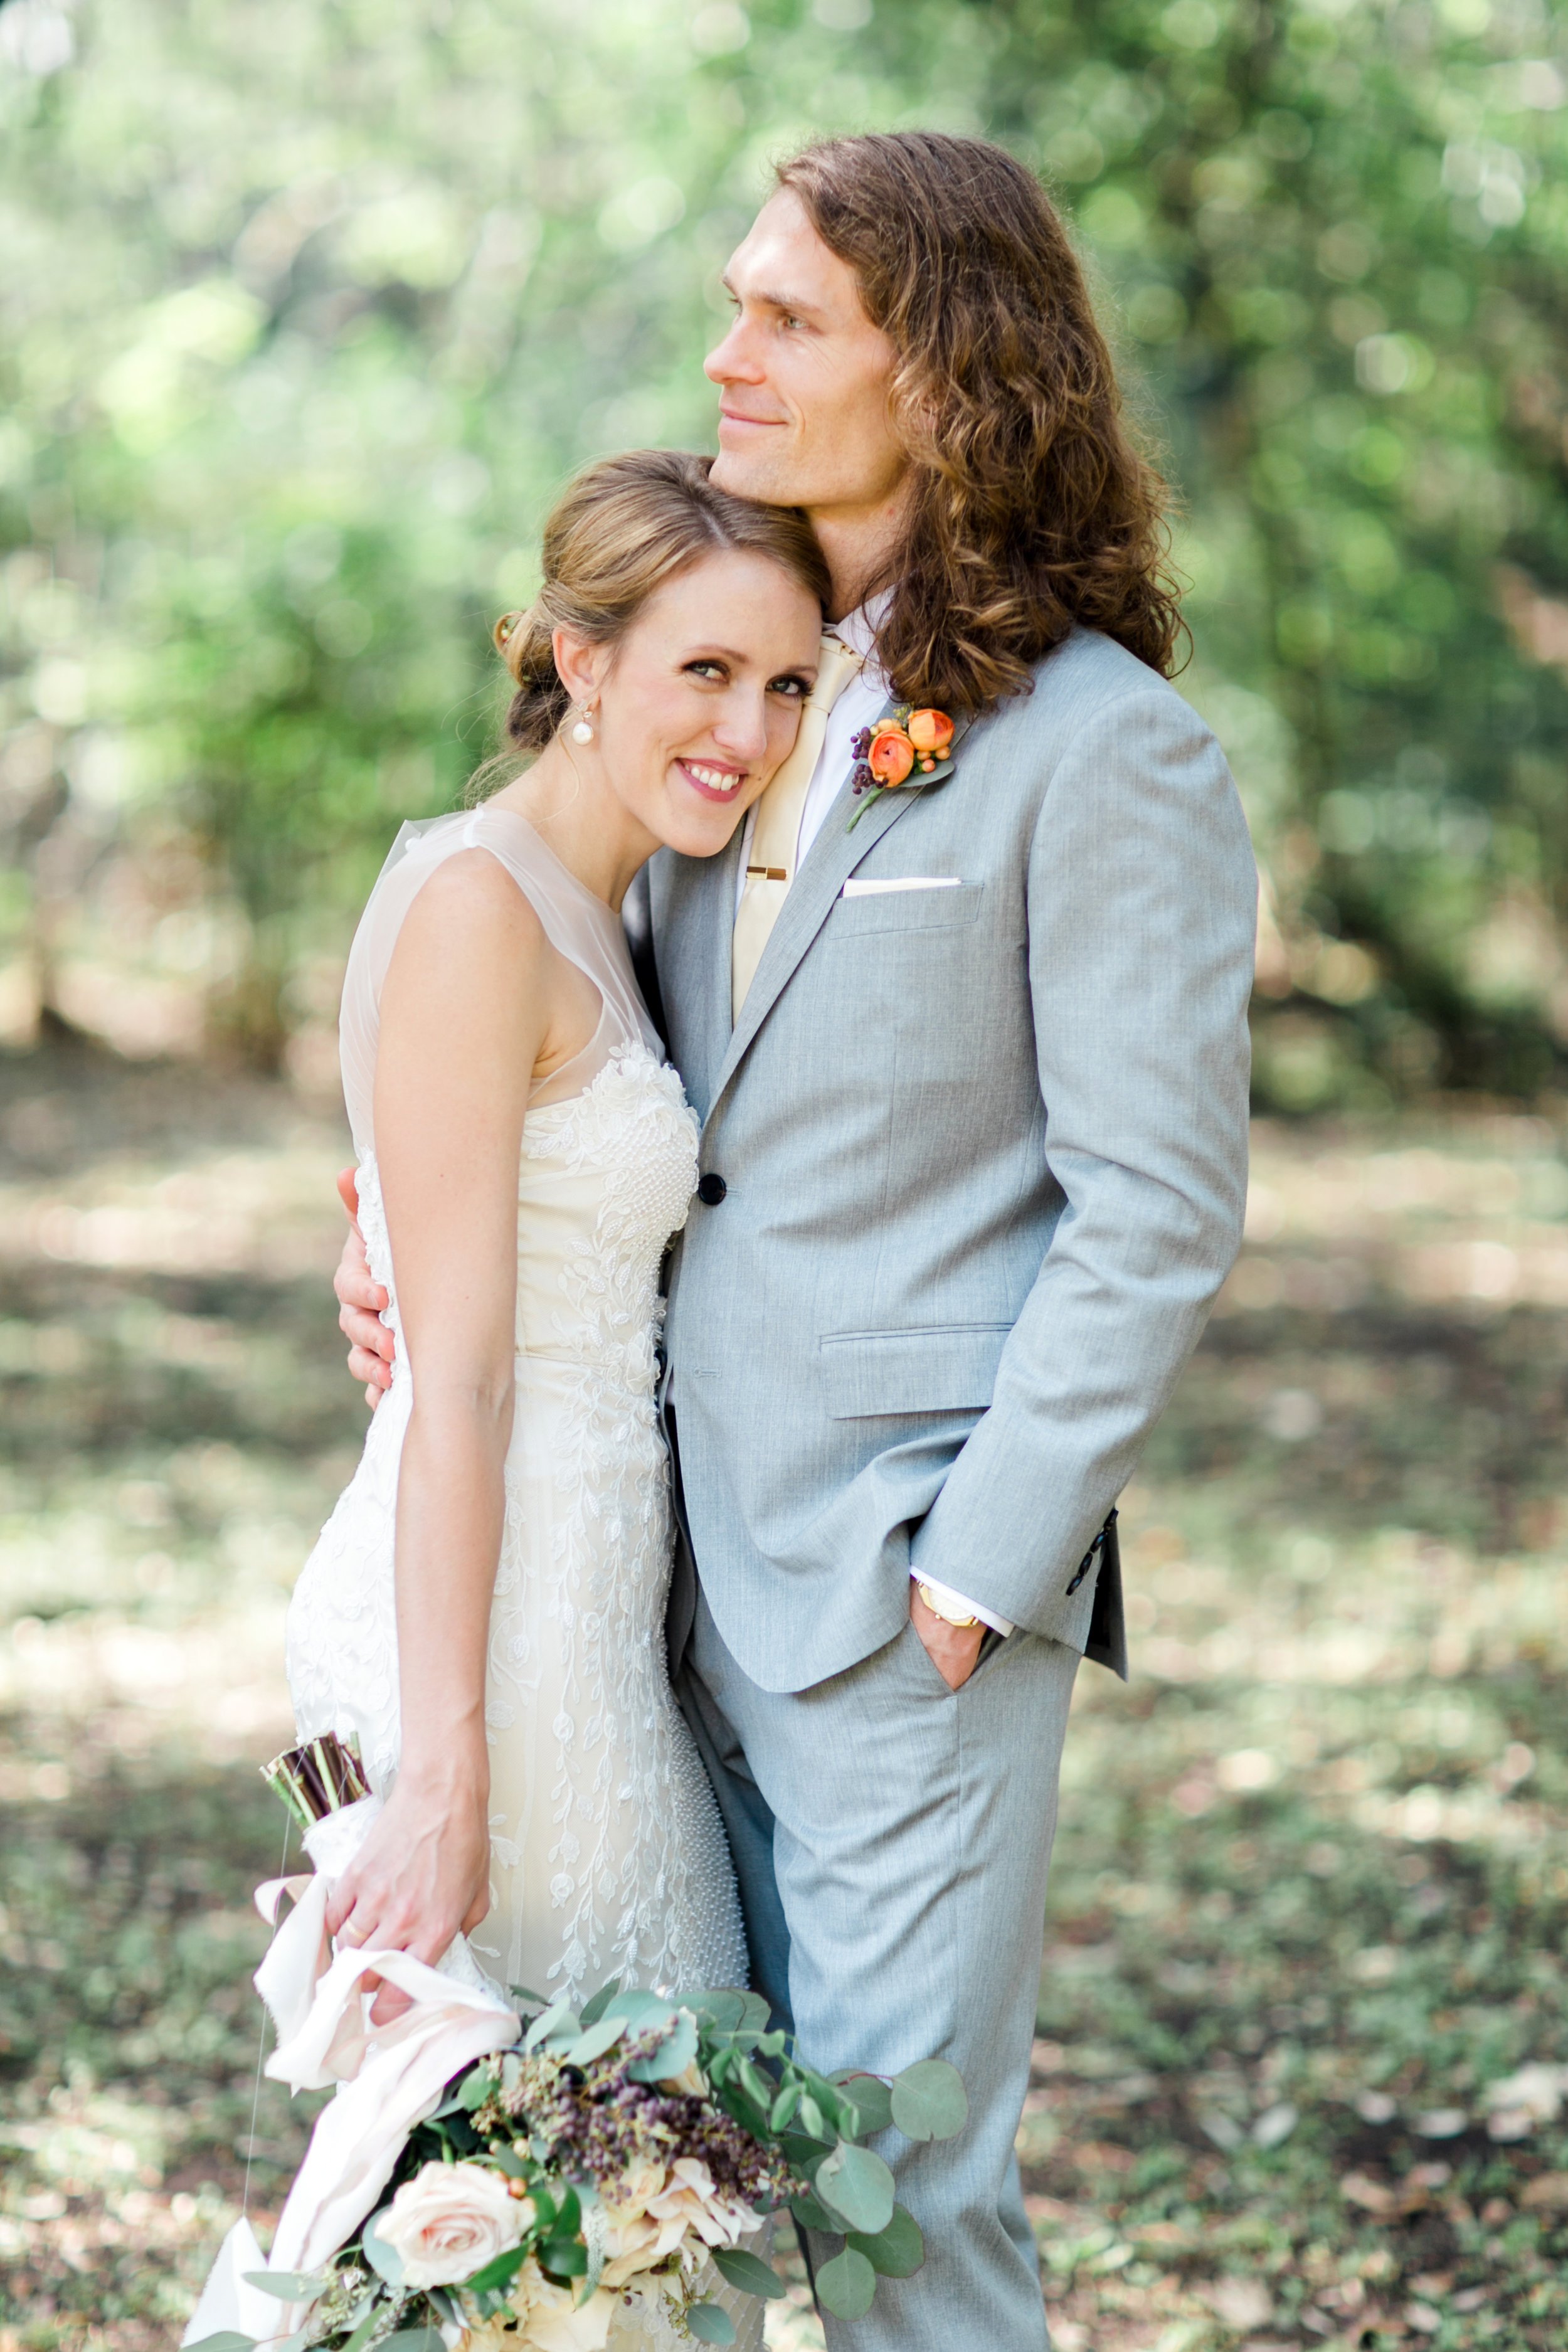 Austin Texas Fine Art Photographer Kayla Snell Photography - Mercury Hall Brunch Wedding